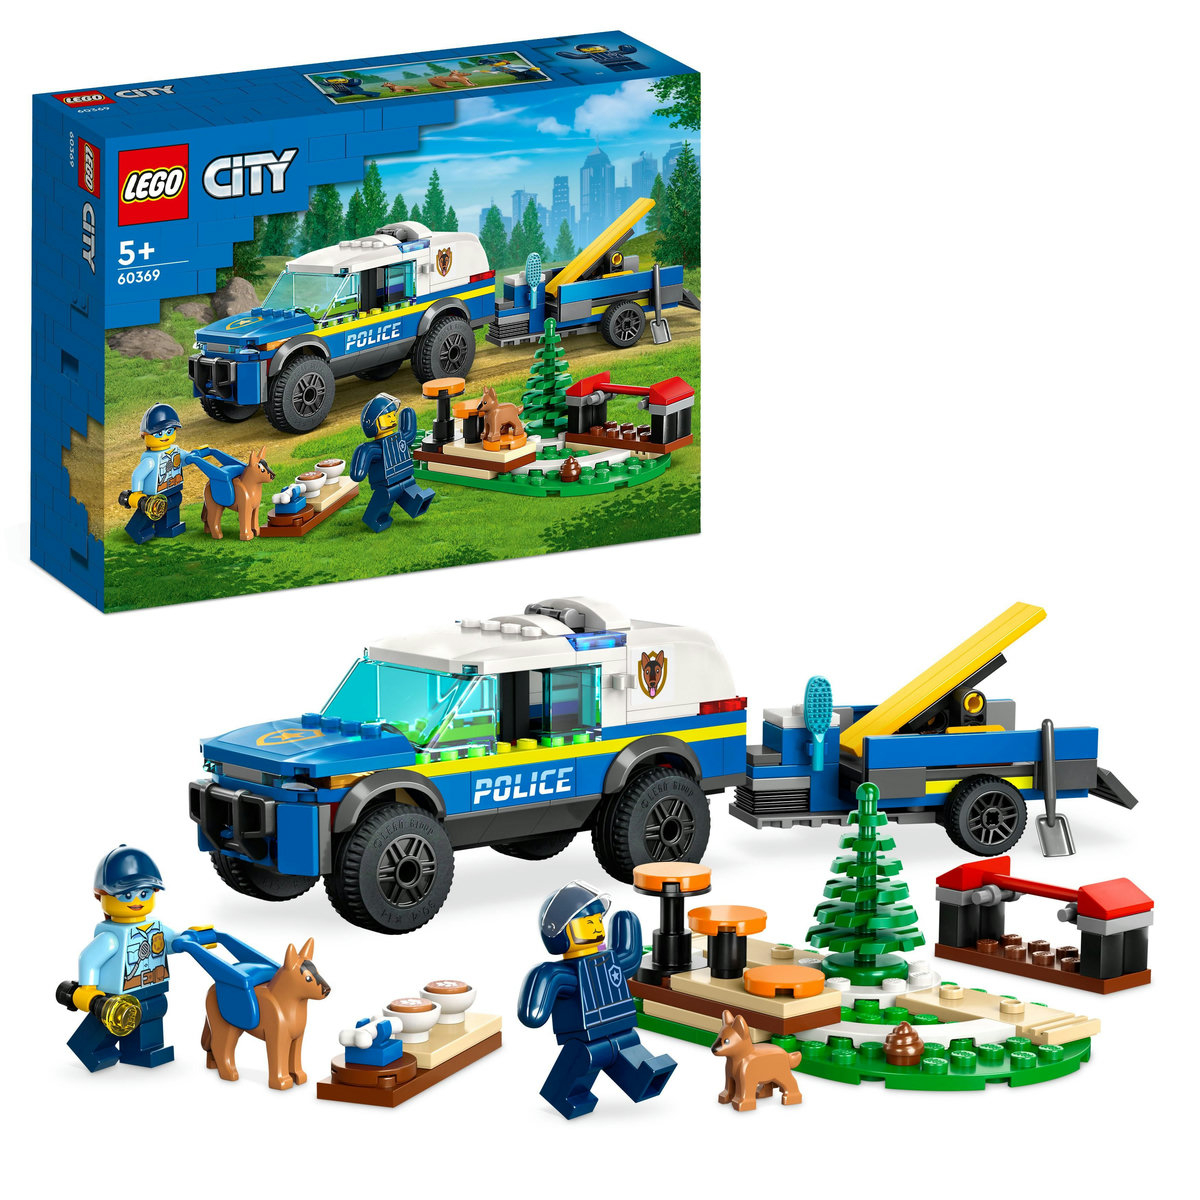 LEGO City - Antrenament canin al politiei mobile 60369, 197 piese